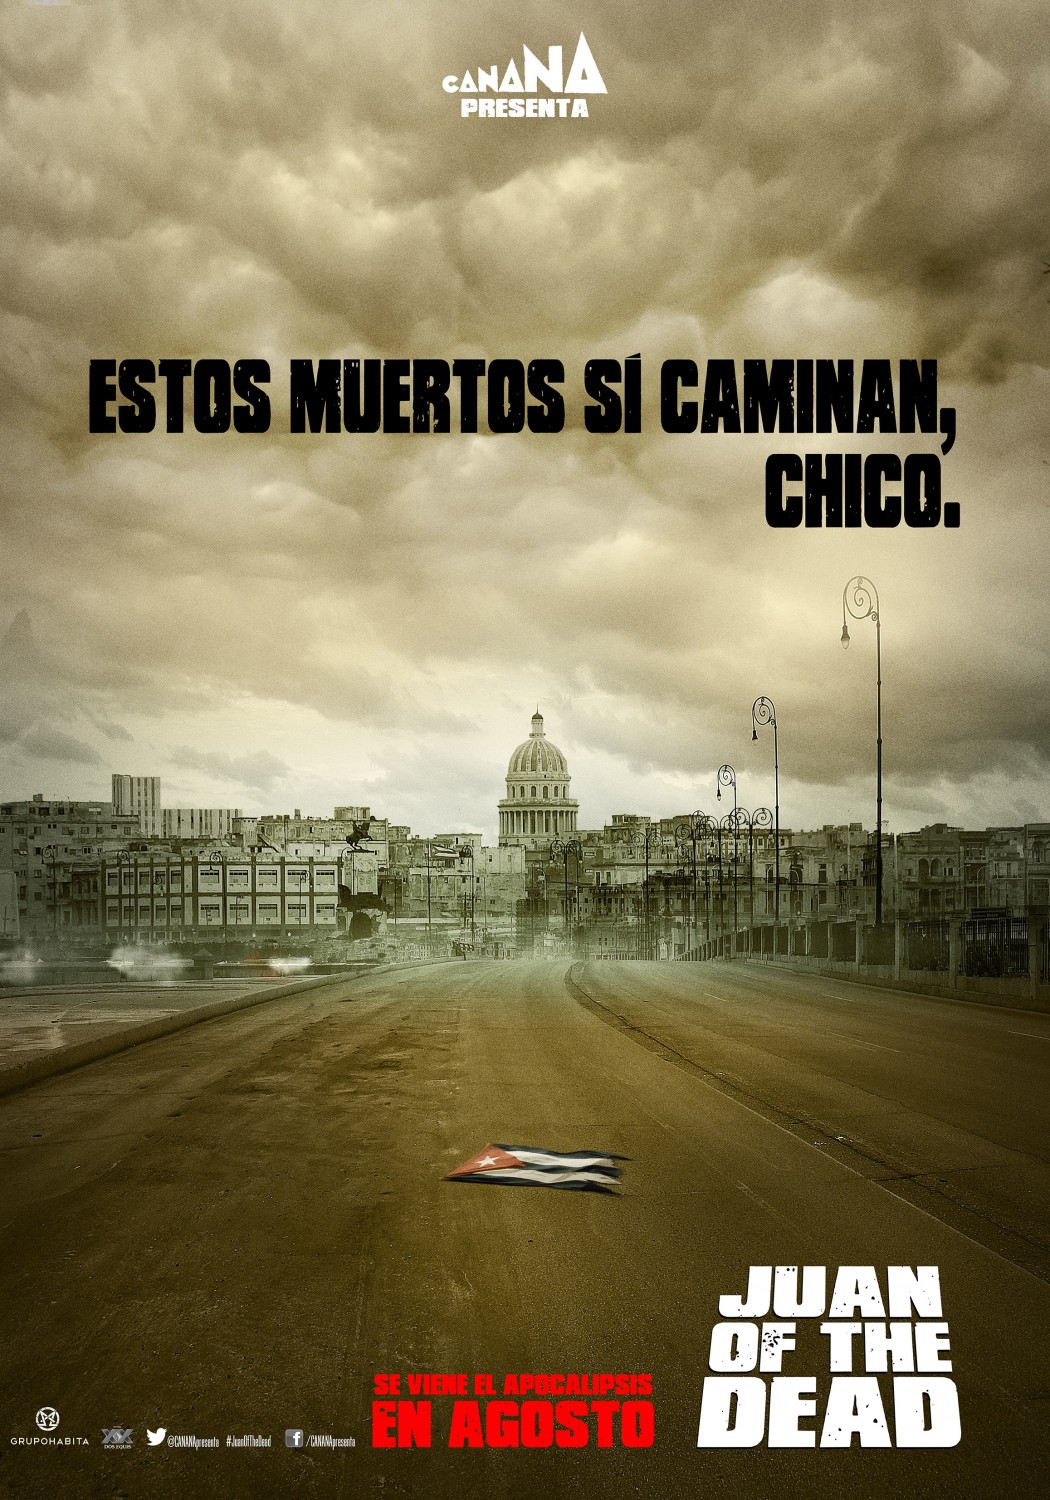 Extra Large Movie Poster Image for Juan de los Muertos (#6 of 6)